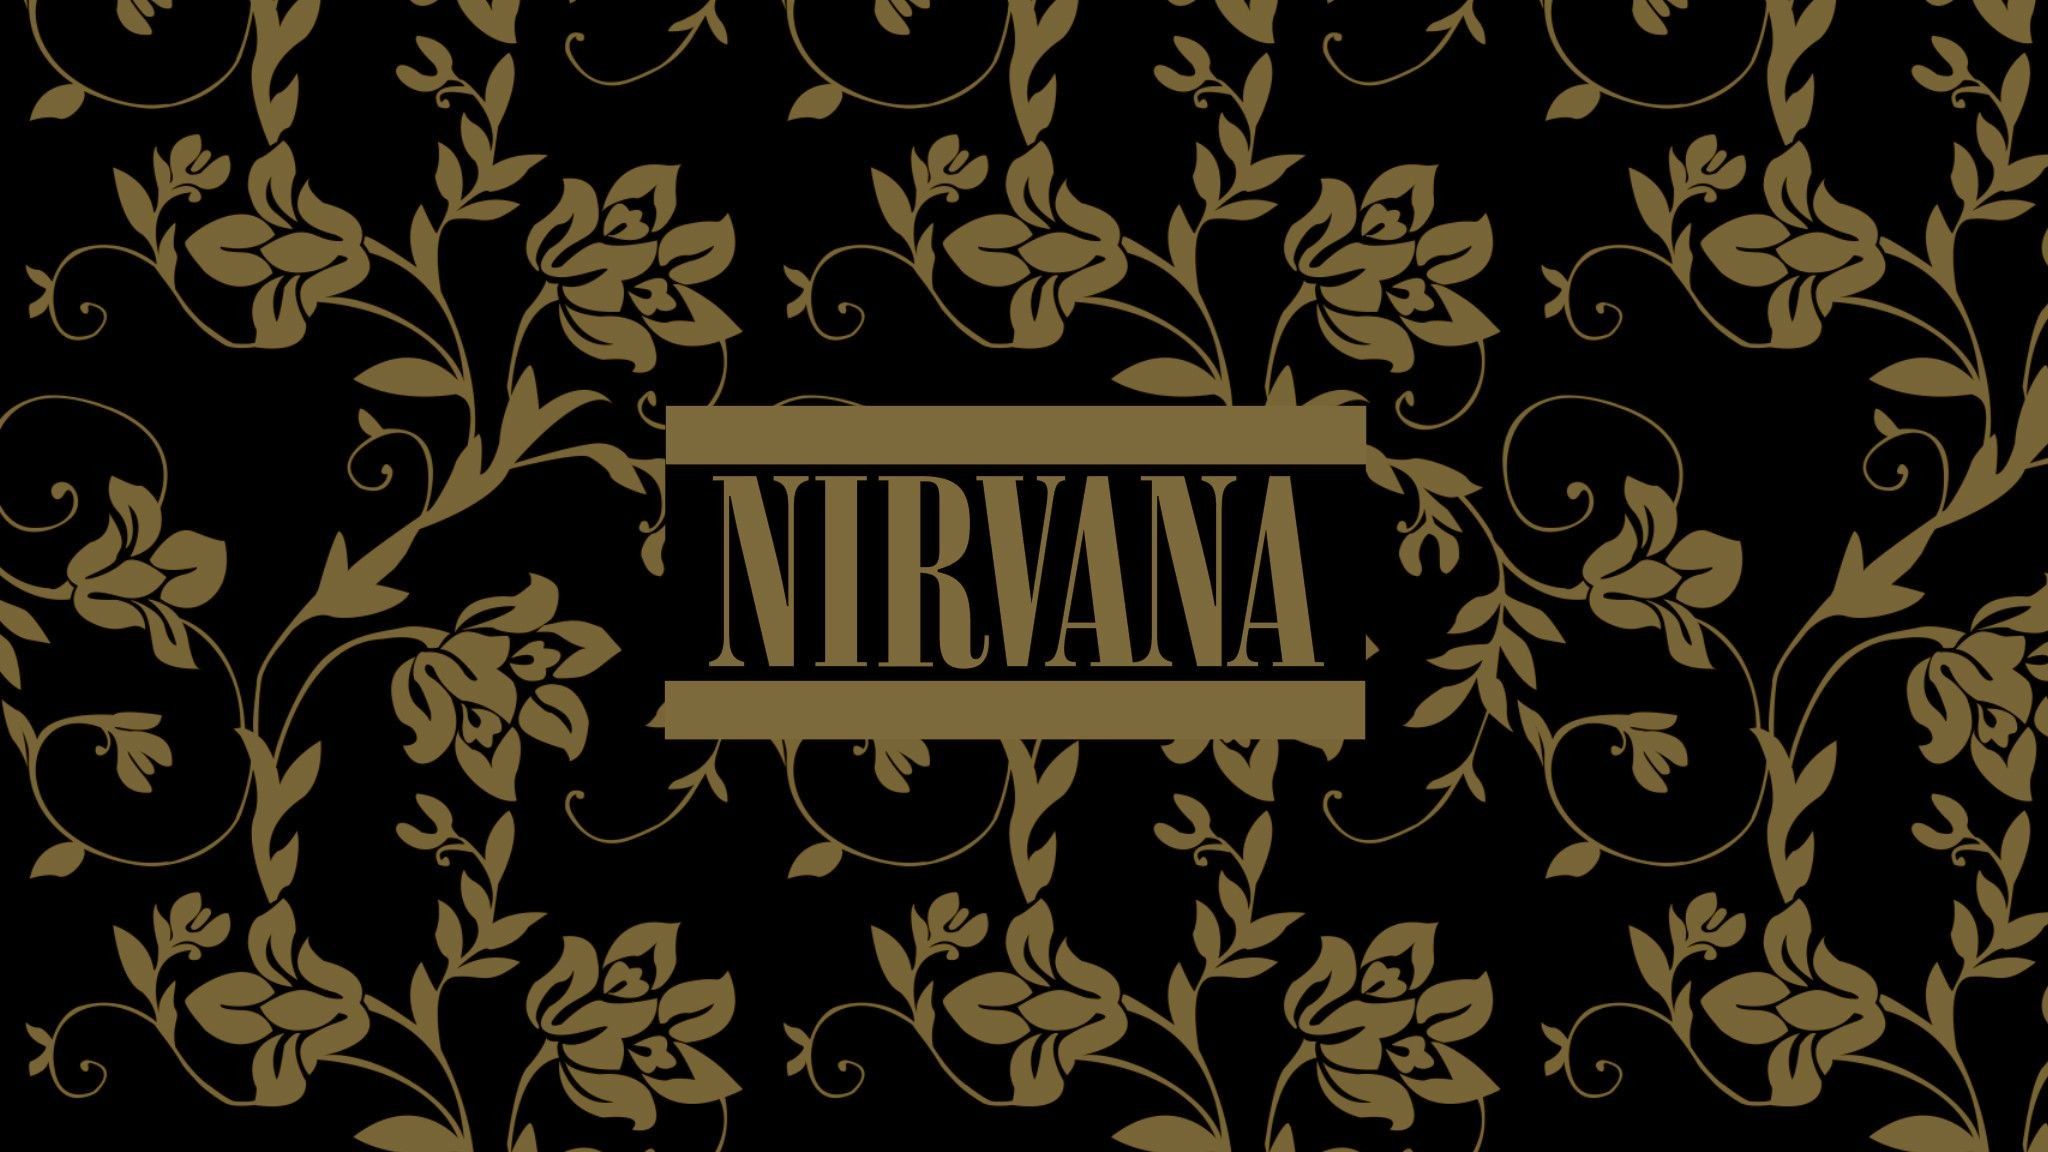 Nirvana wallpaper  Music wallpapers  42404